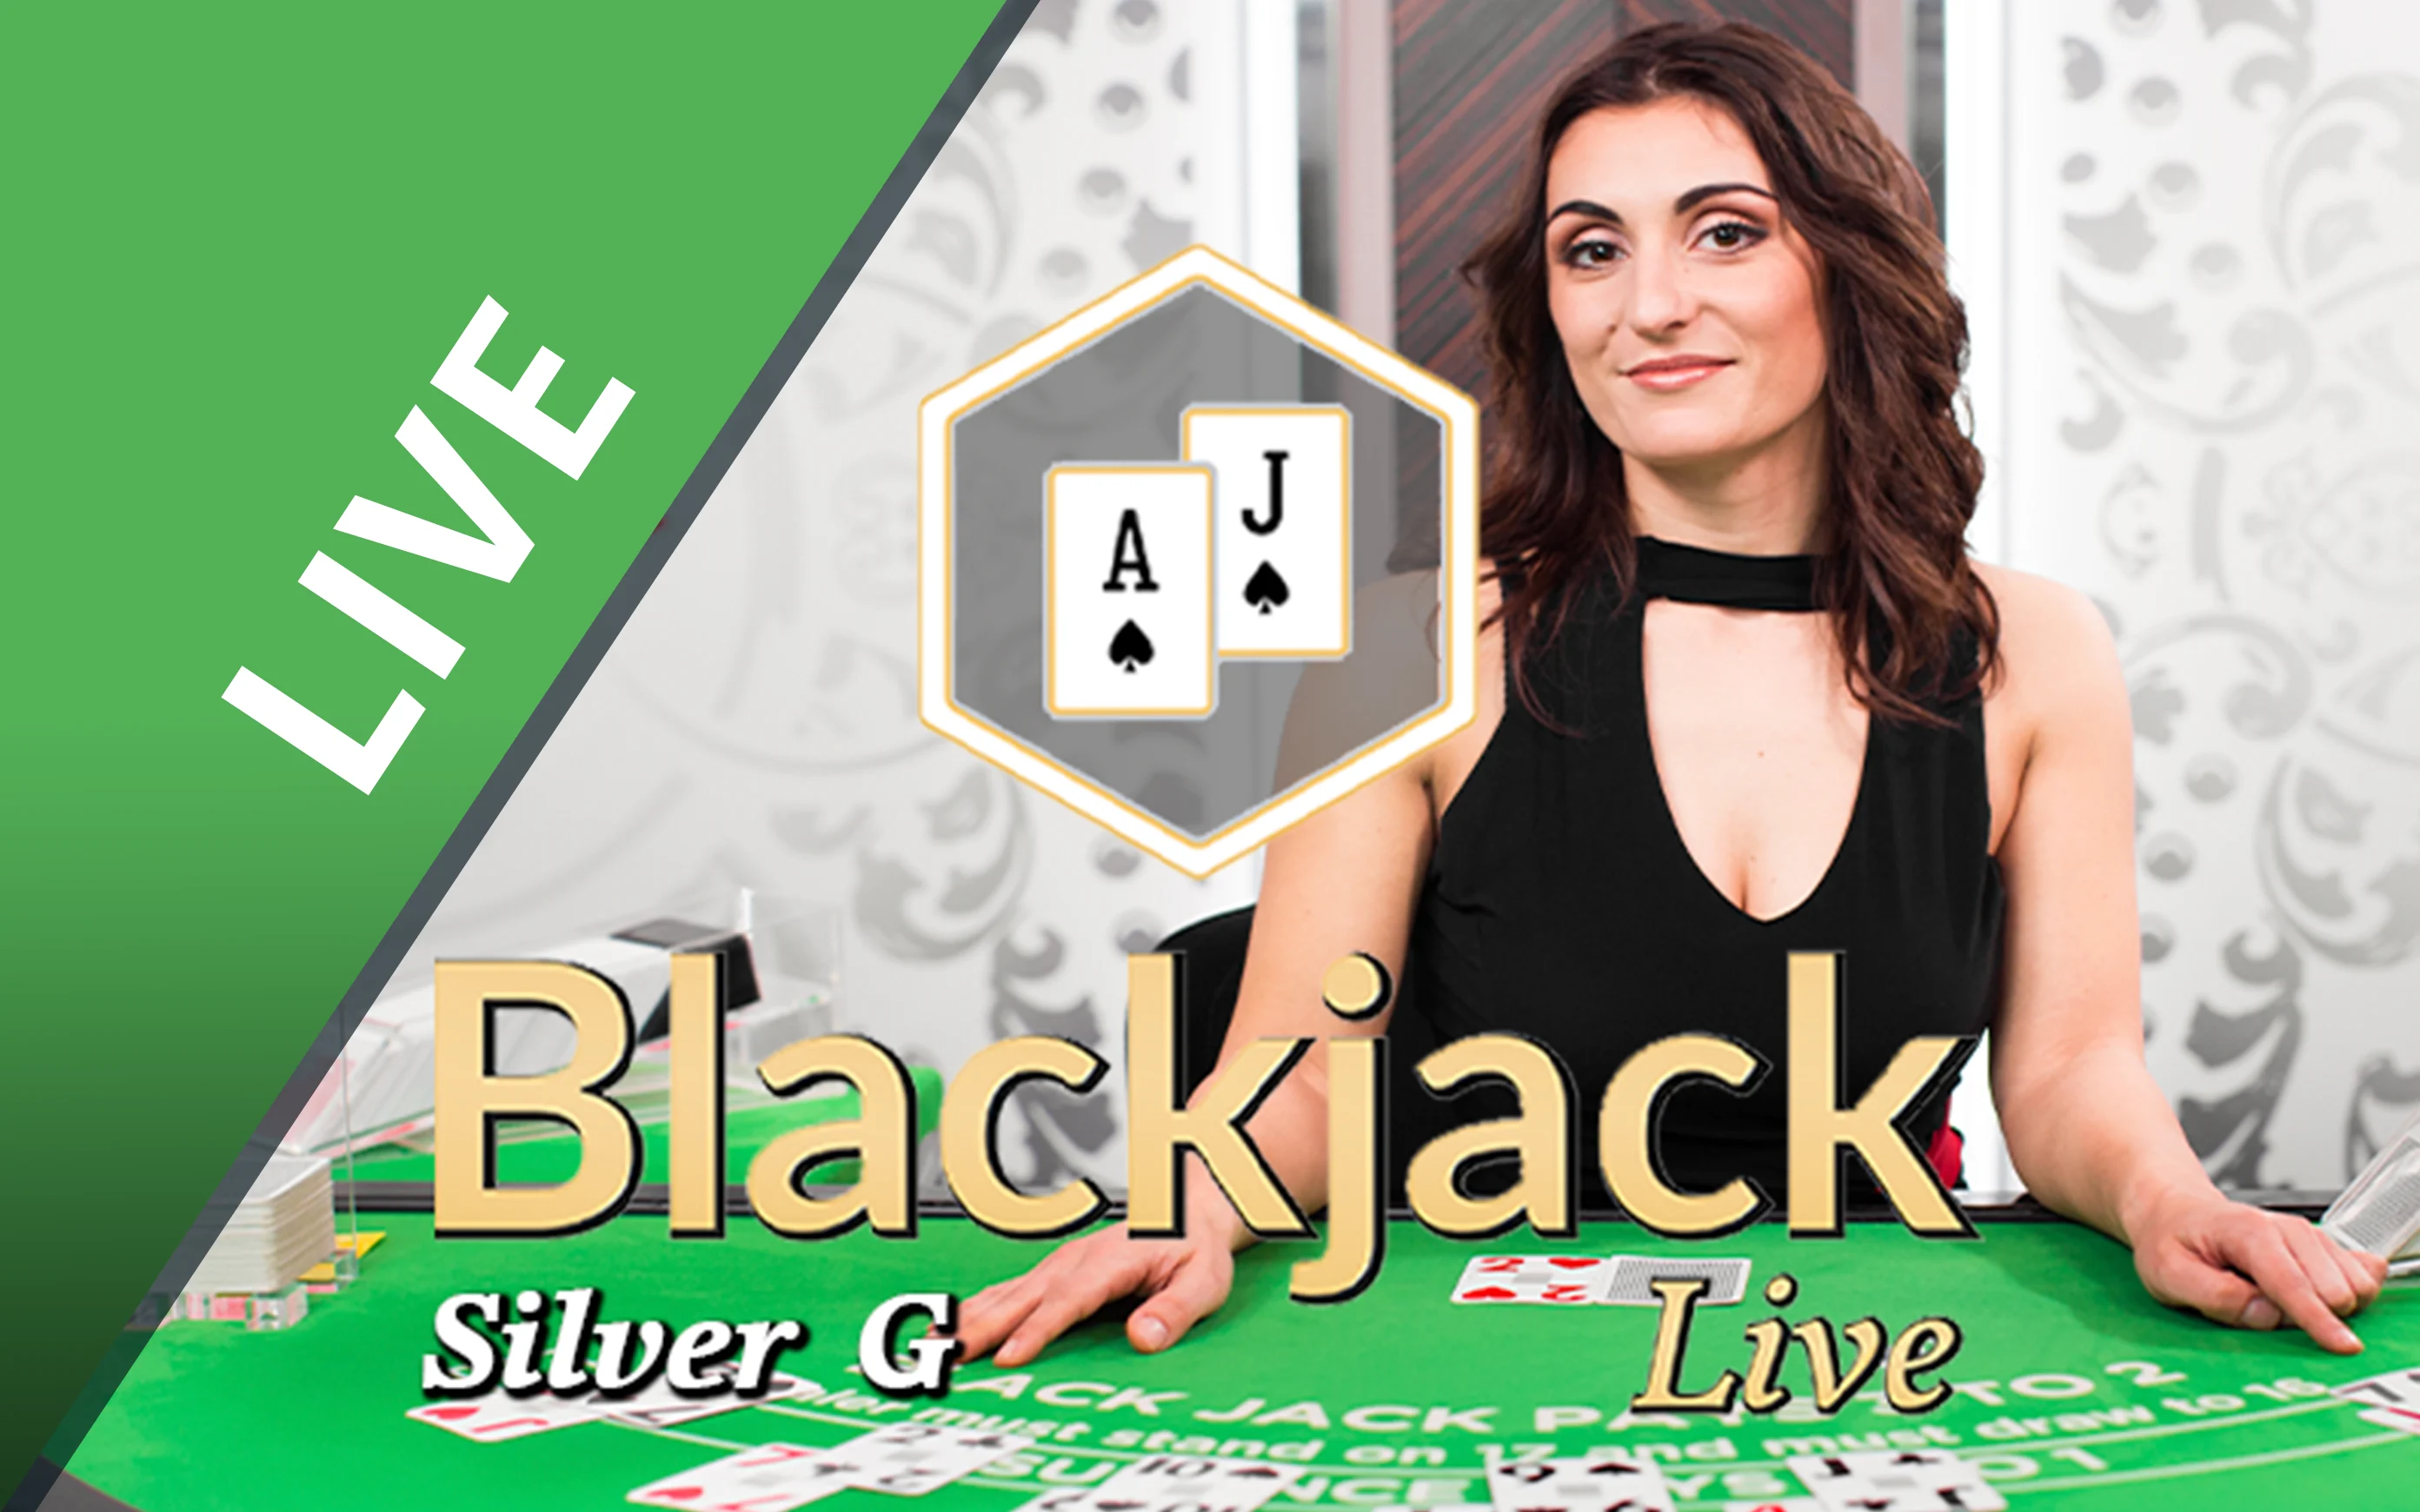 Joacă Blackjack Silver G în cazinoul online Starcasino.be